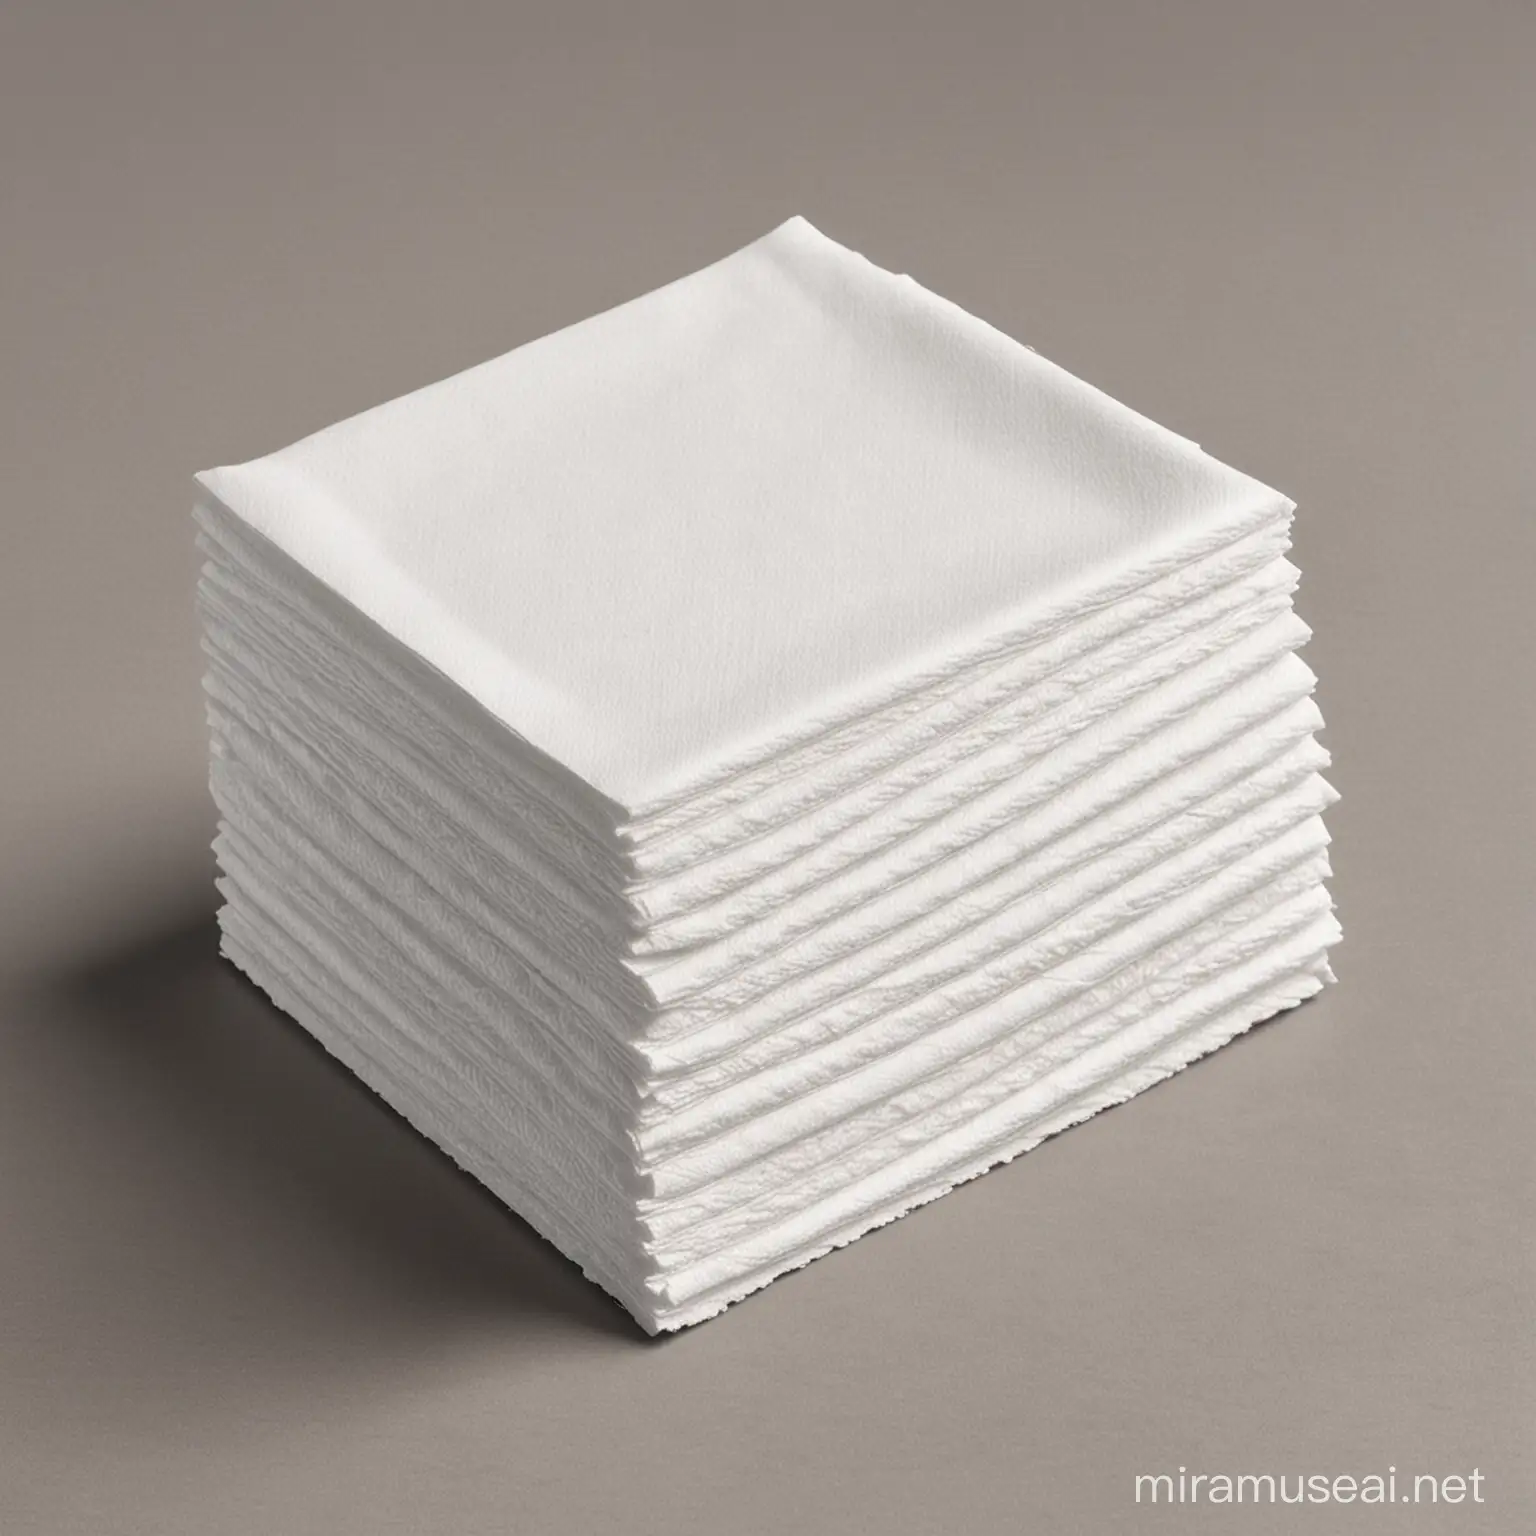 create a realistic white stack of paper napkin